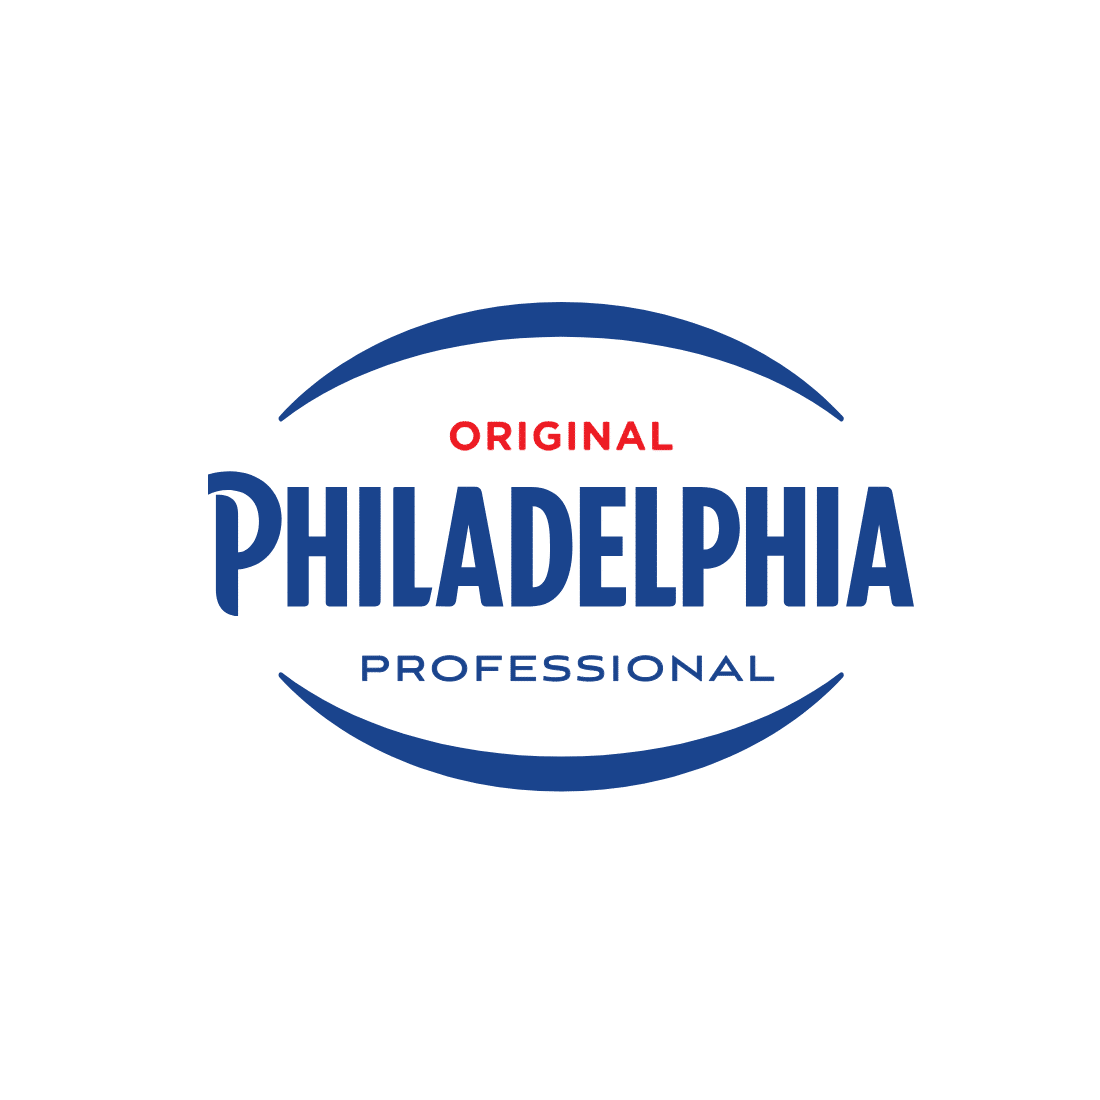 Philadelphia Professional